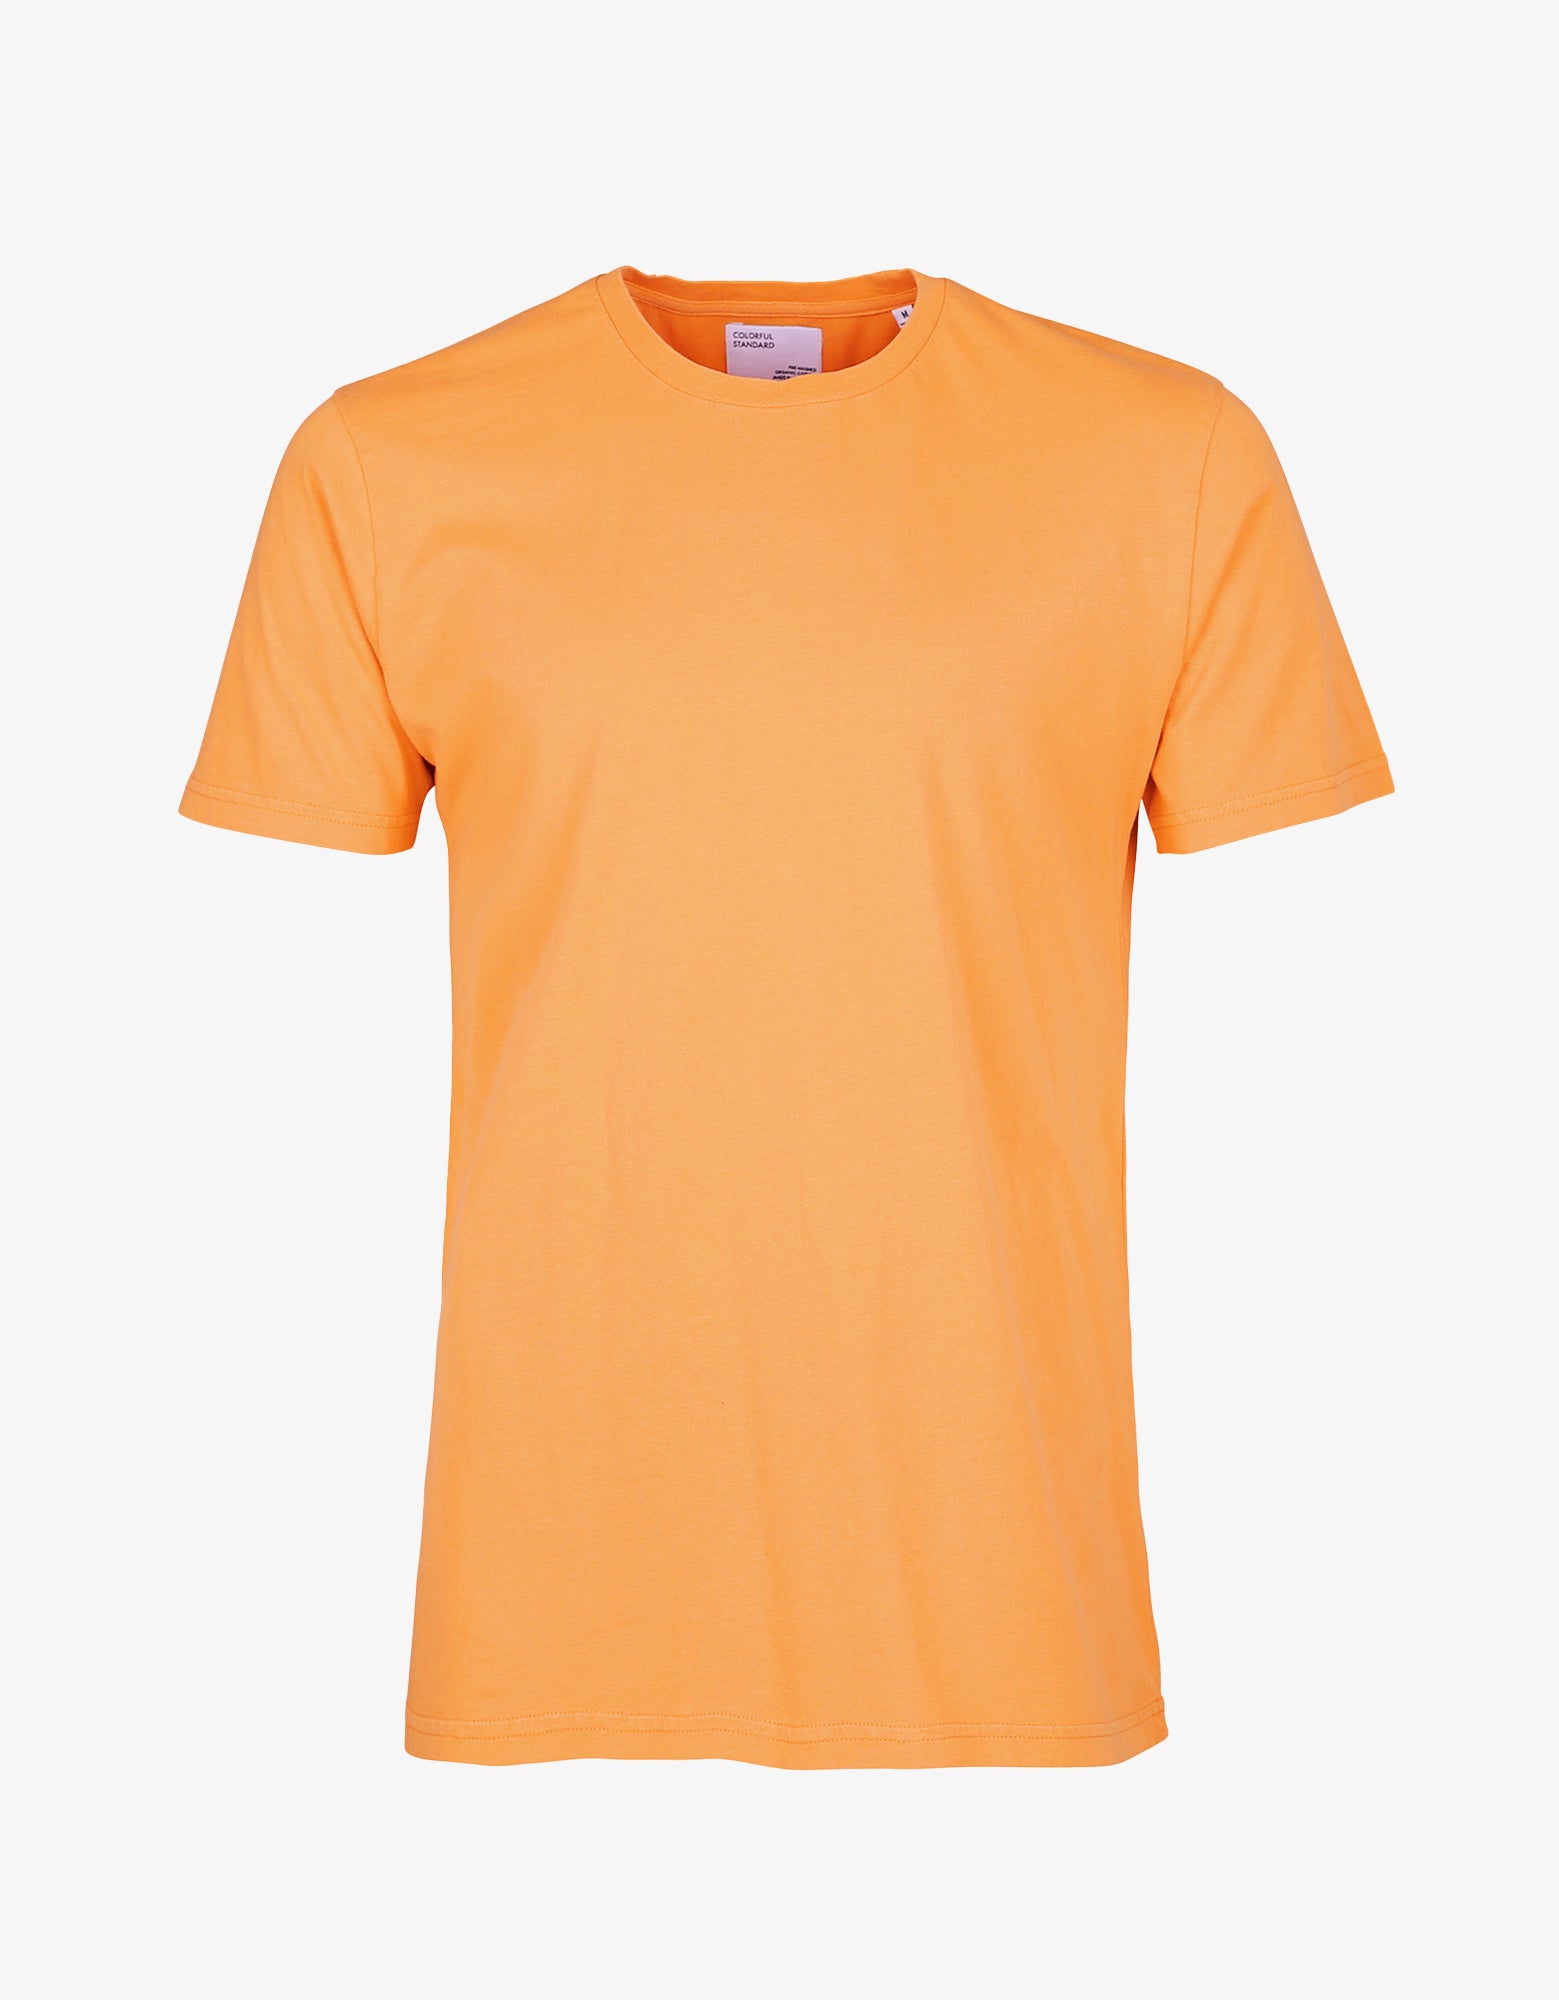 Colorful Standard Classic Organic Tee T-shirt Sandstone Orange